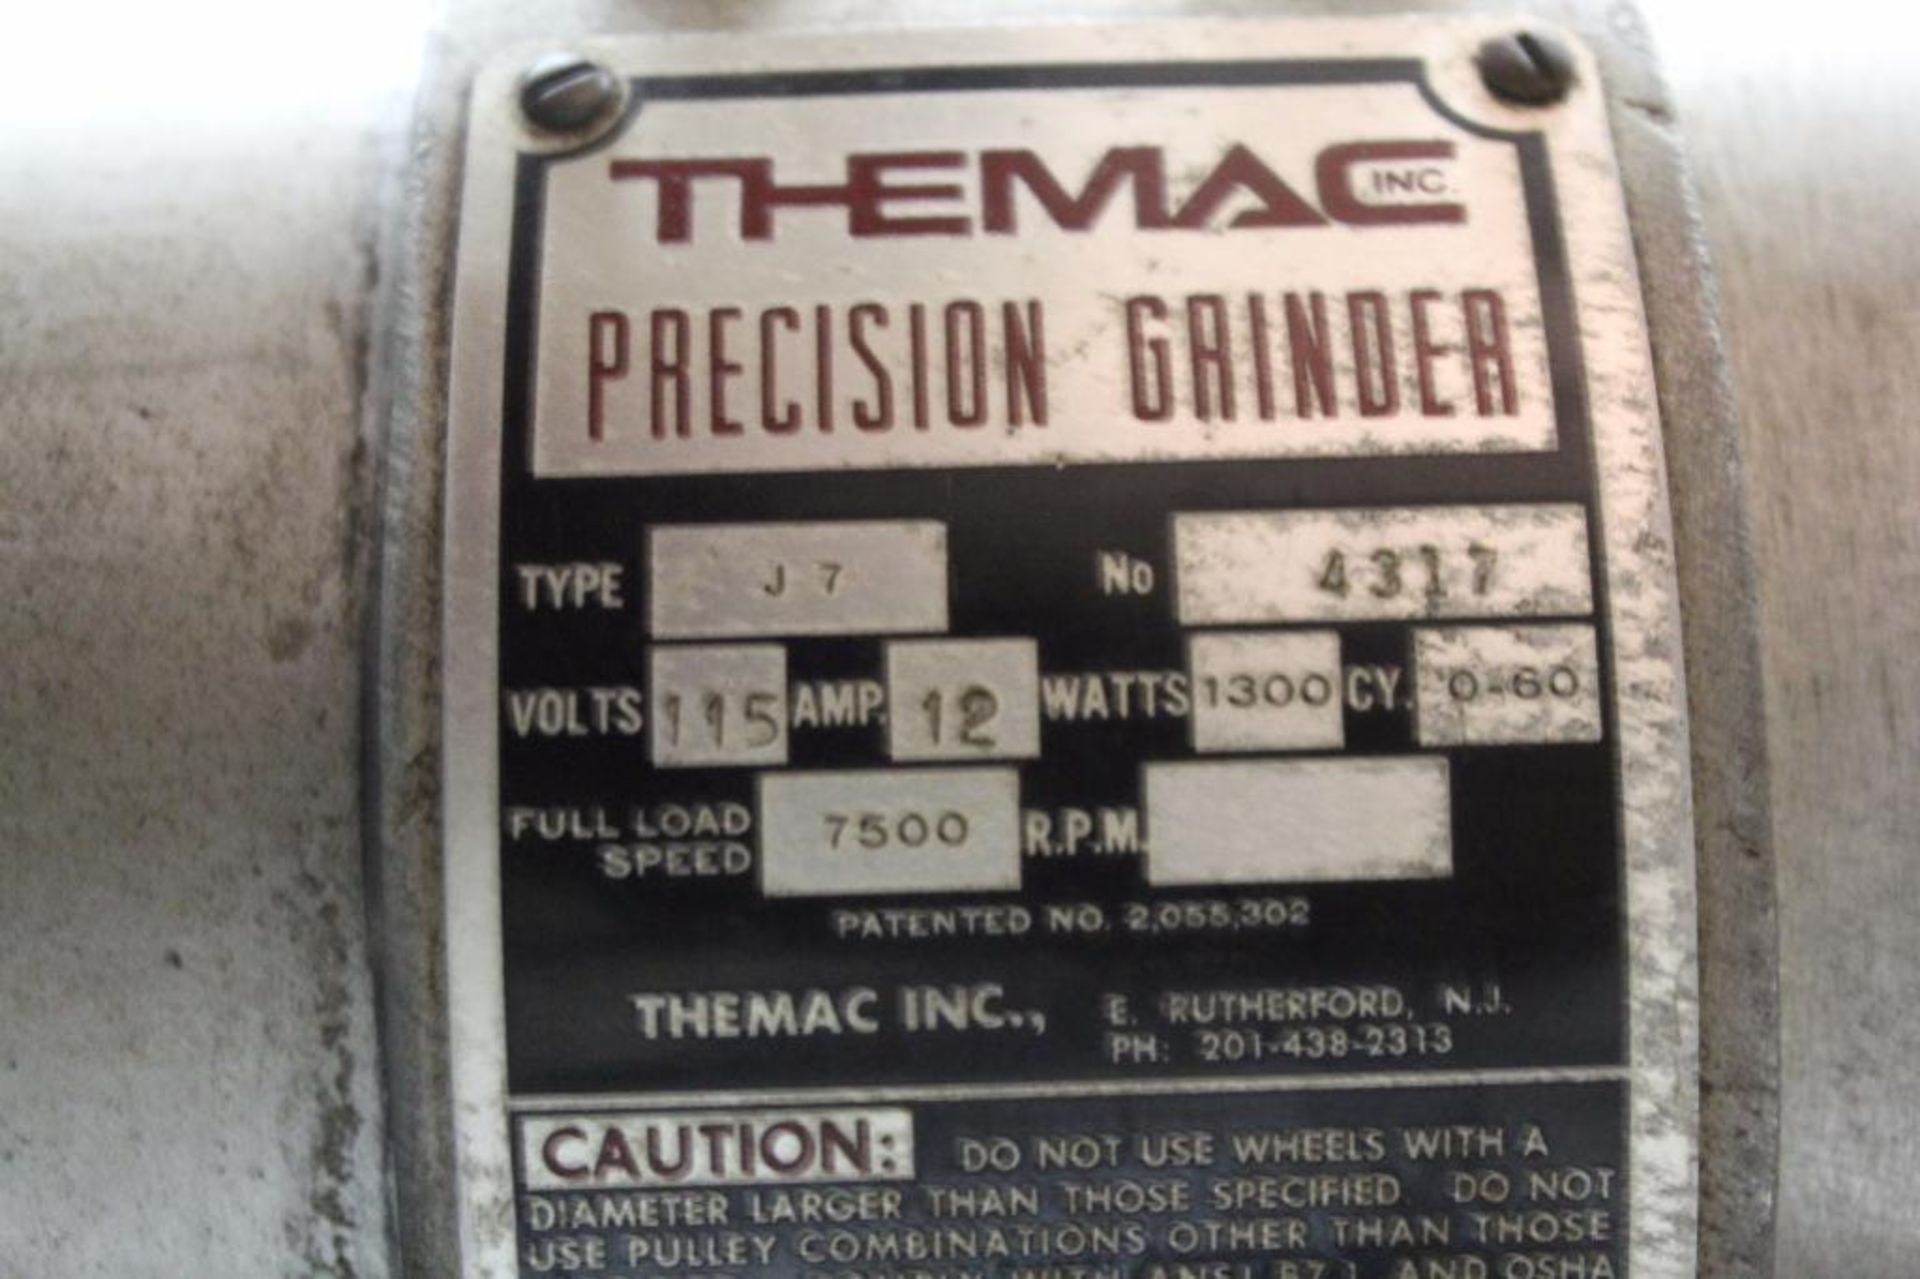 Themac J-7 Precision grinder 7500 RPM/ 115v/1ph - Image 5 of 5